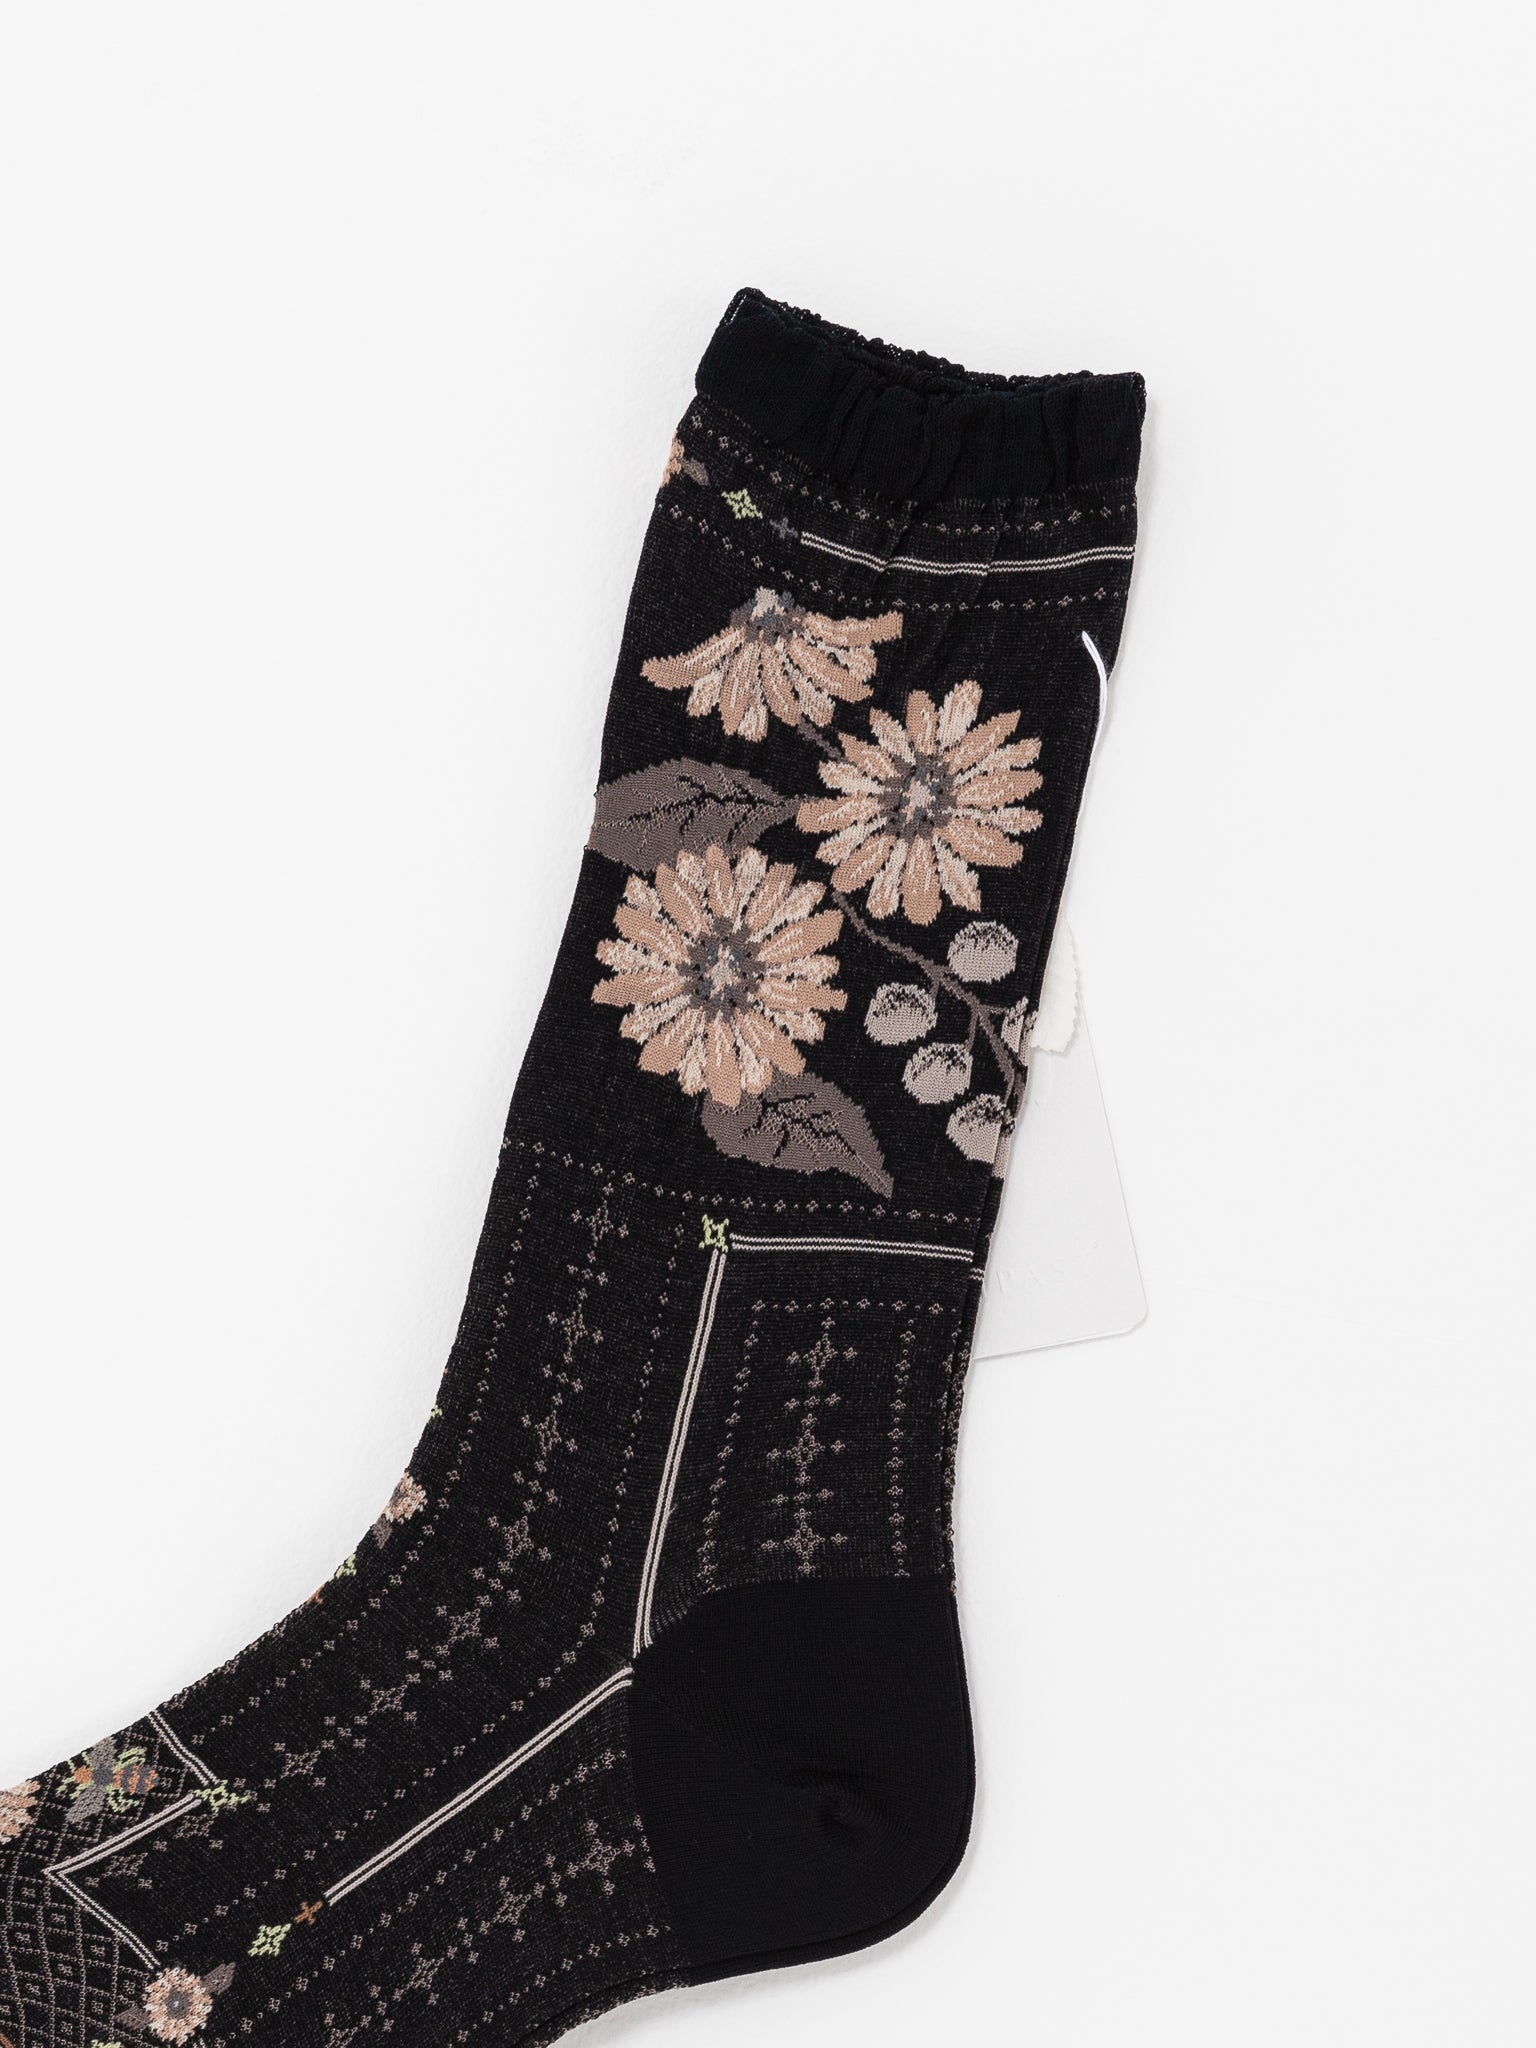 Antipast Gerbera Socks, Black - Worthwhile